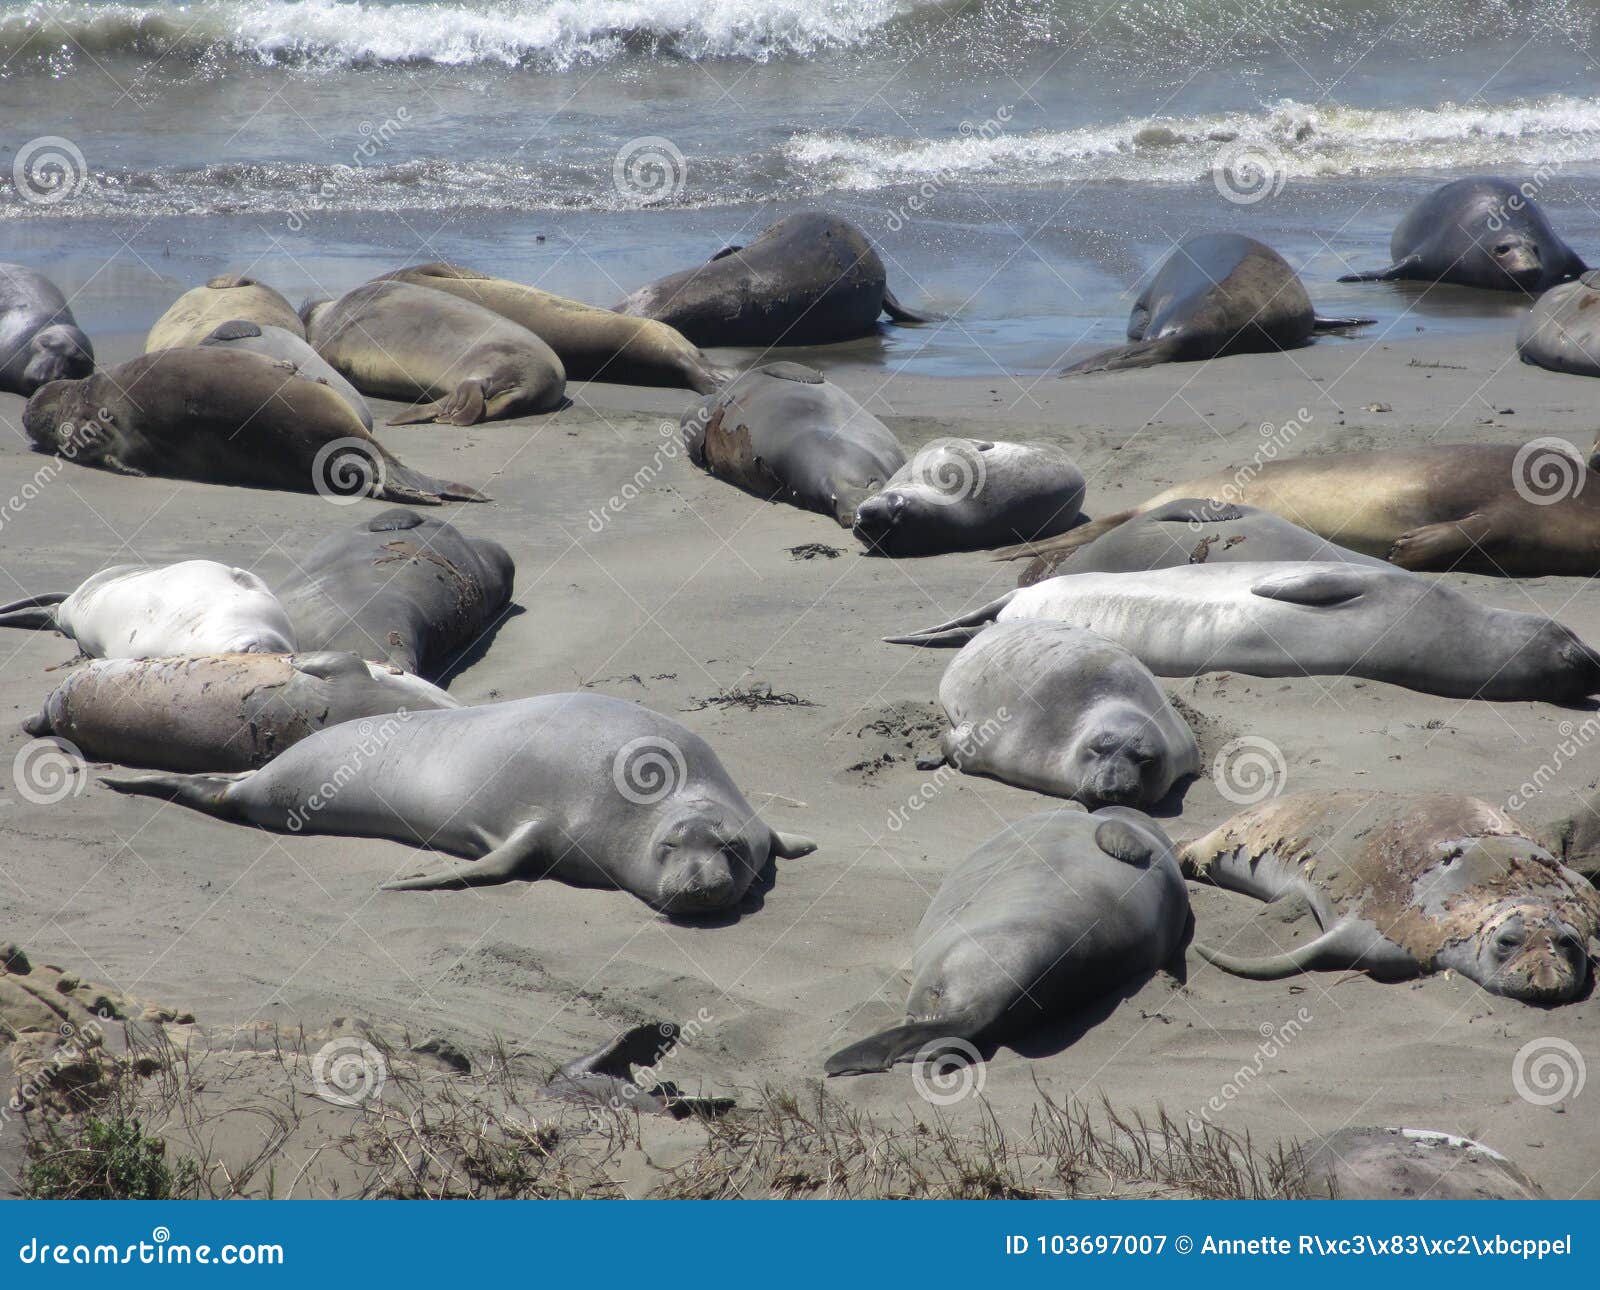 sunbathing sea lions on the beach, highway no. 1, california, usa